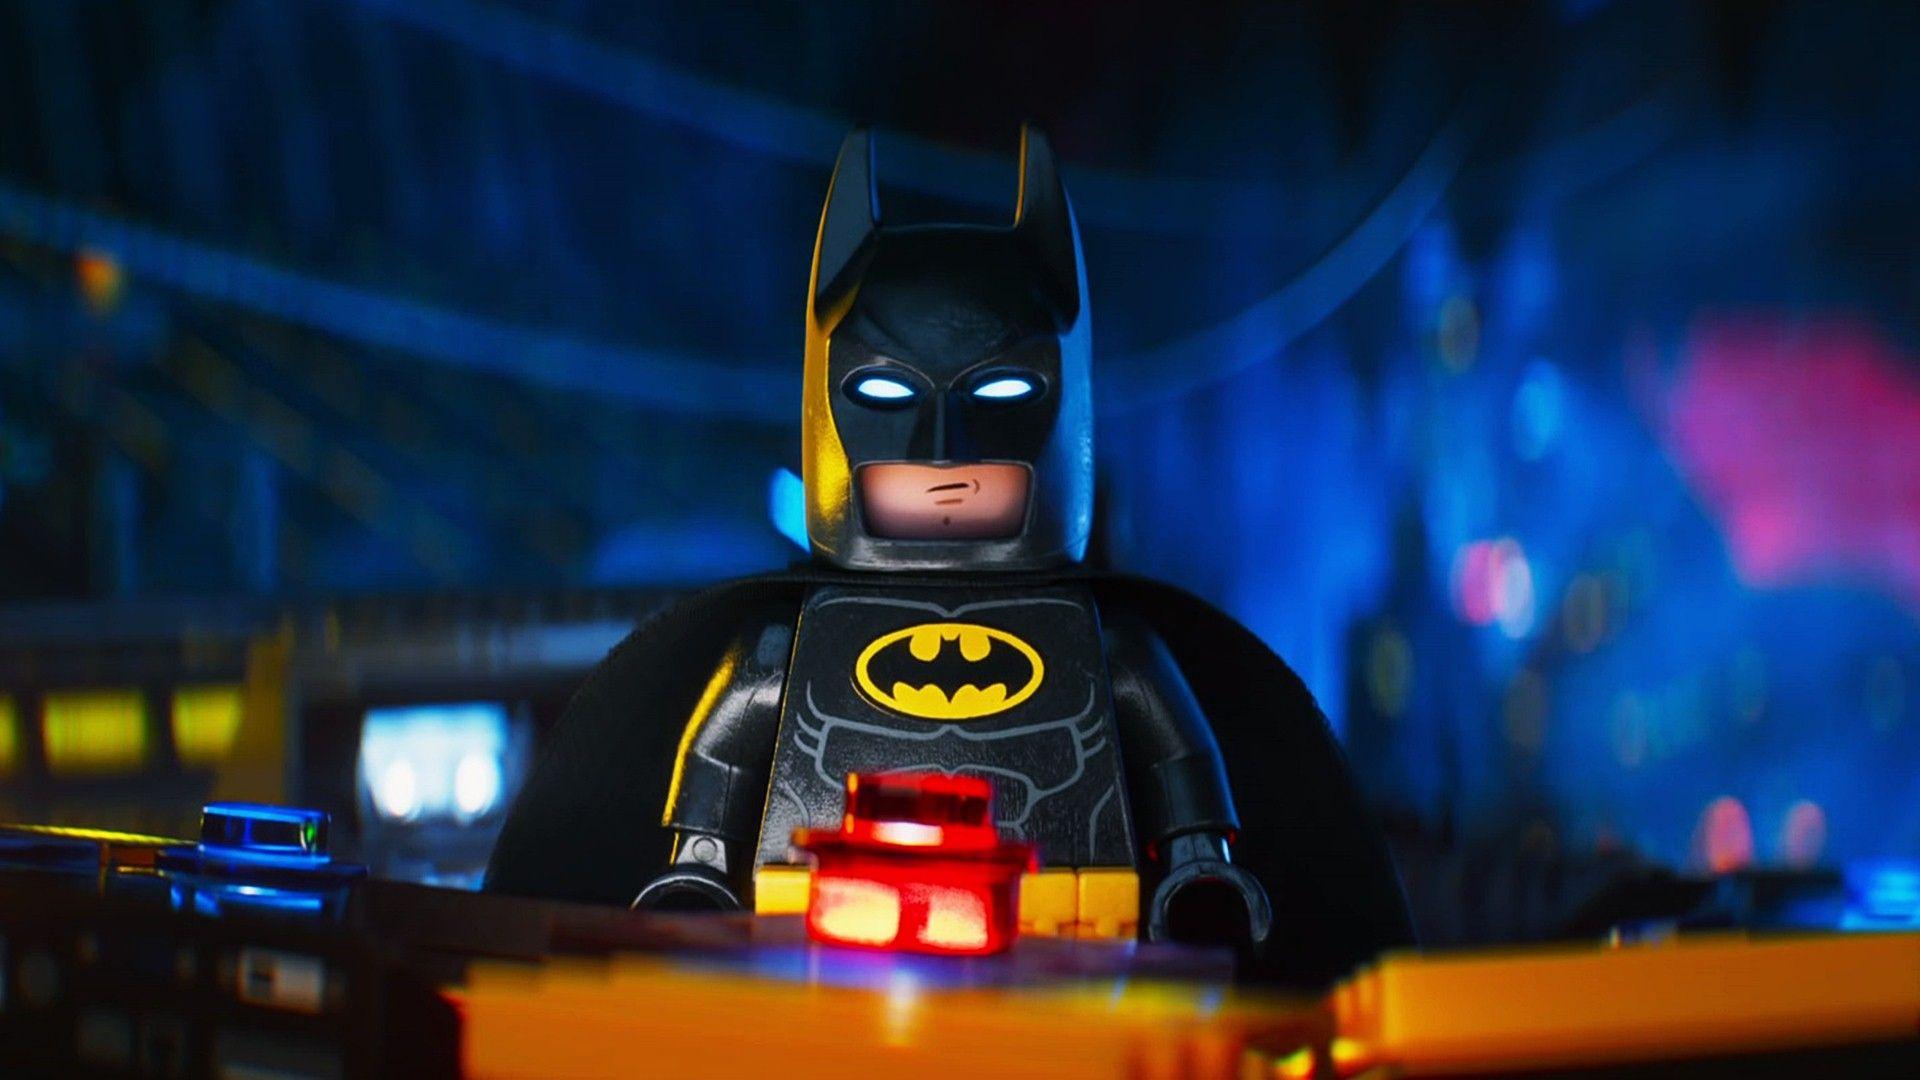 The LEGO Batman Movie Batman In Mask Wallpapers 05567.